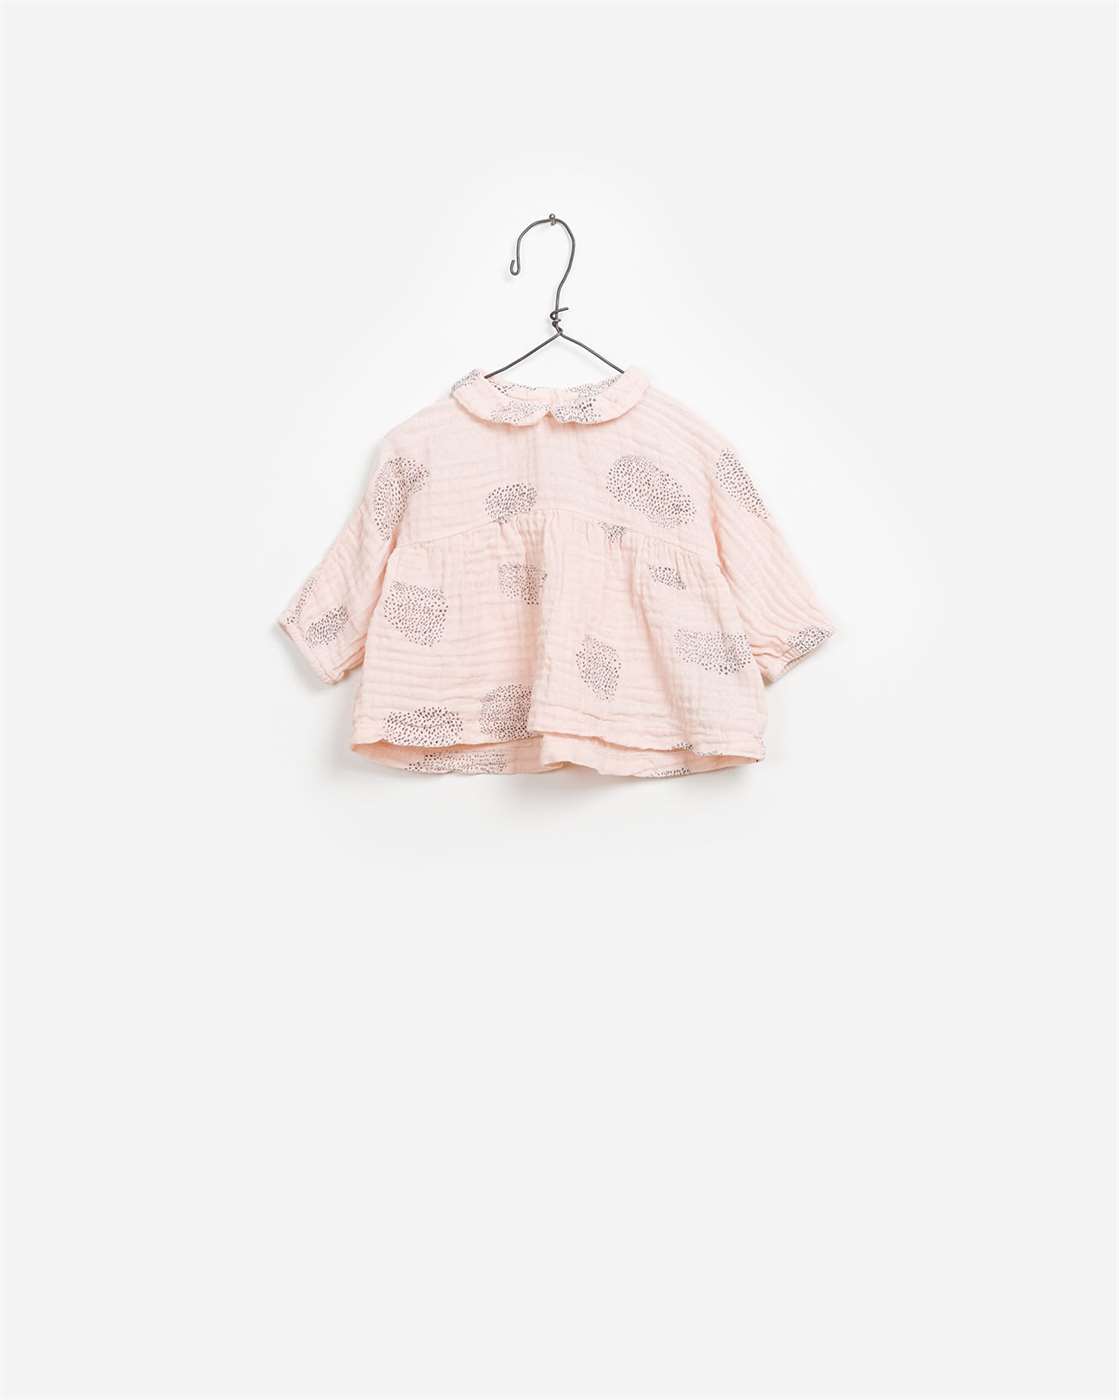 BeeBoo|BeeBoo PlayUp vêtement bébé baby cloth blouse imprimé woven print coton bio organic cotton rose pink